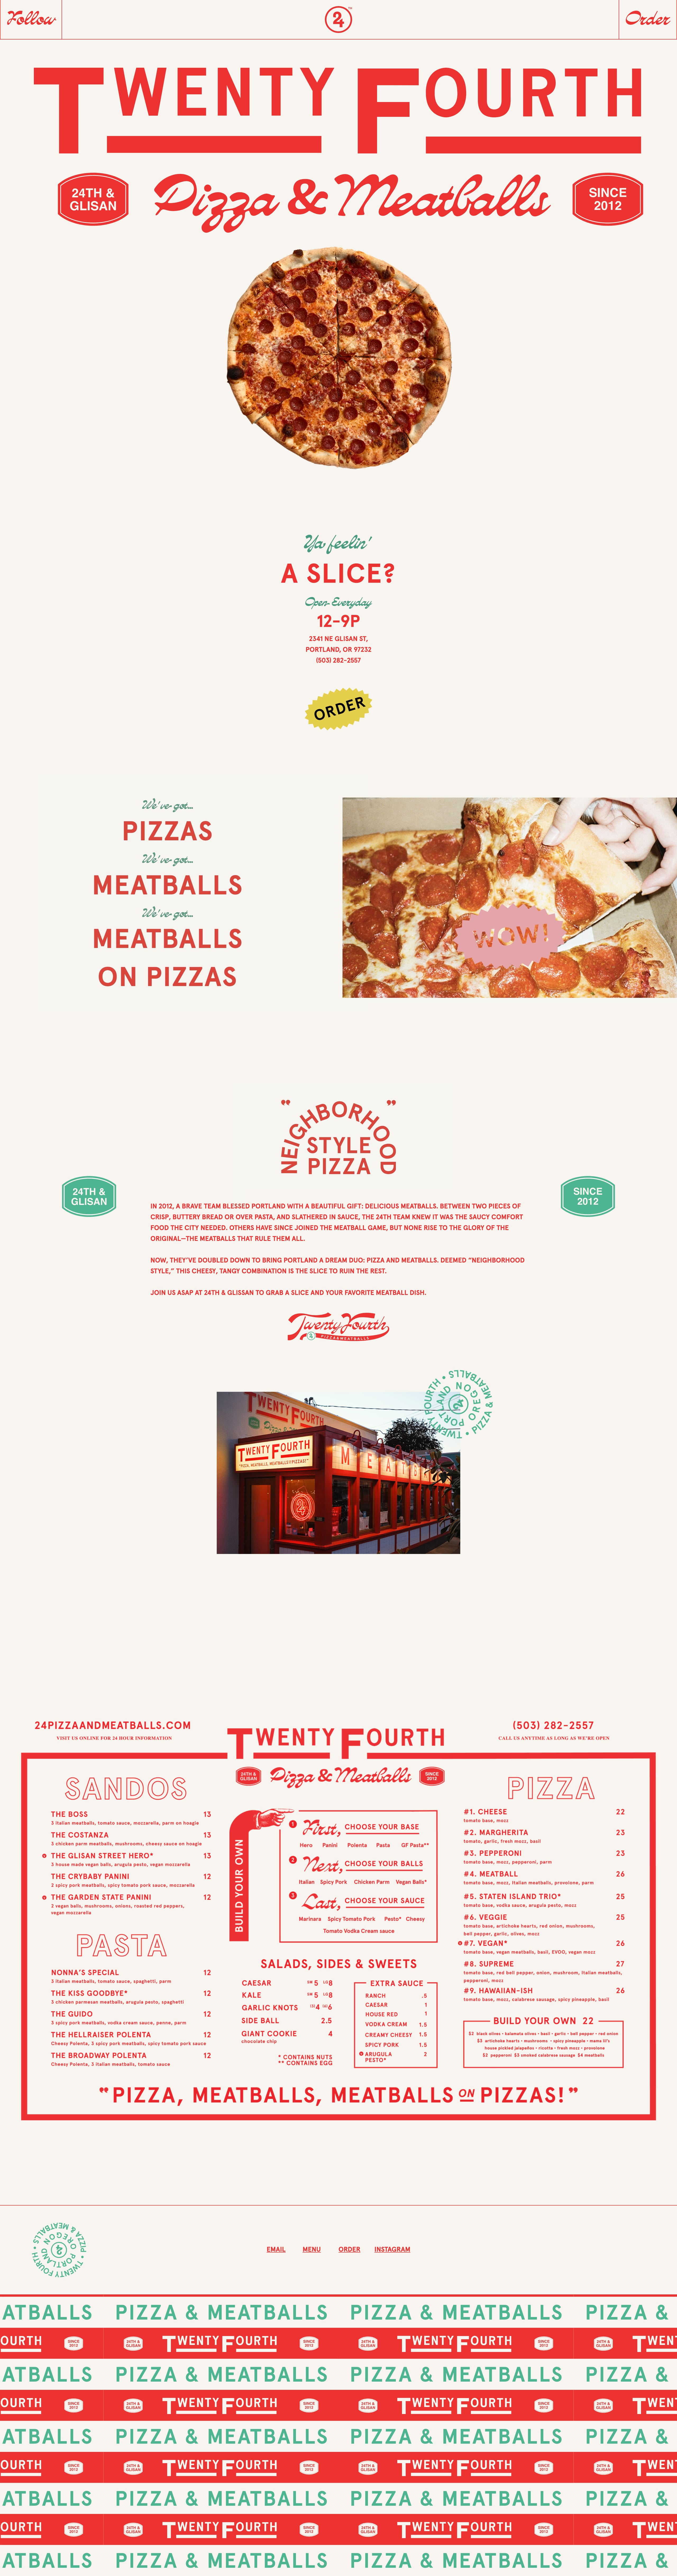 24th Pizza and Meatballs Website Screenshot